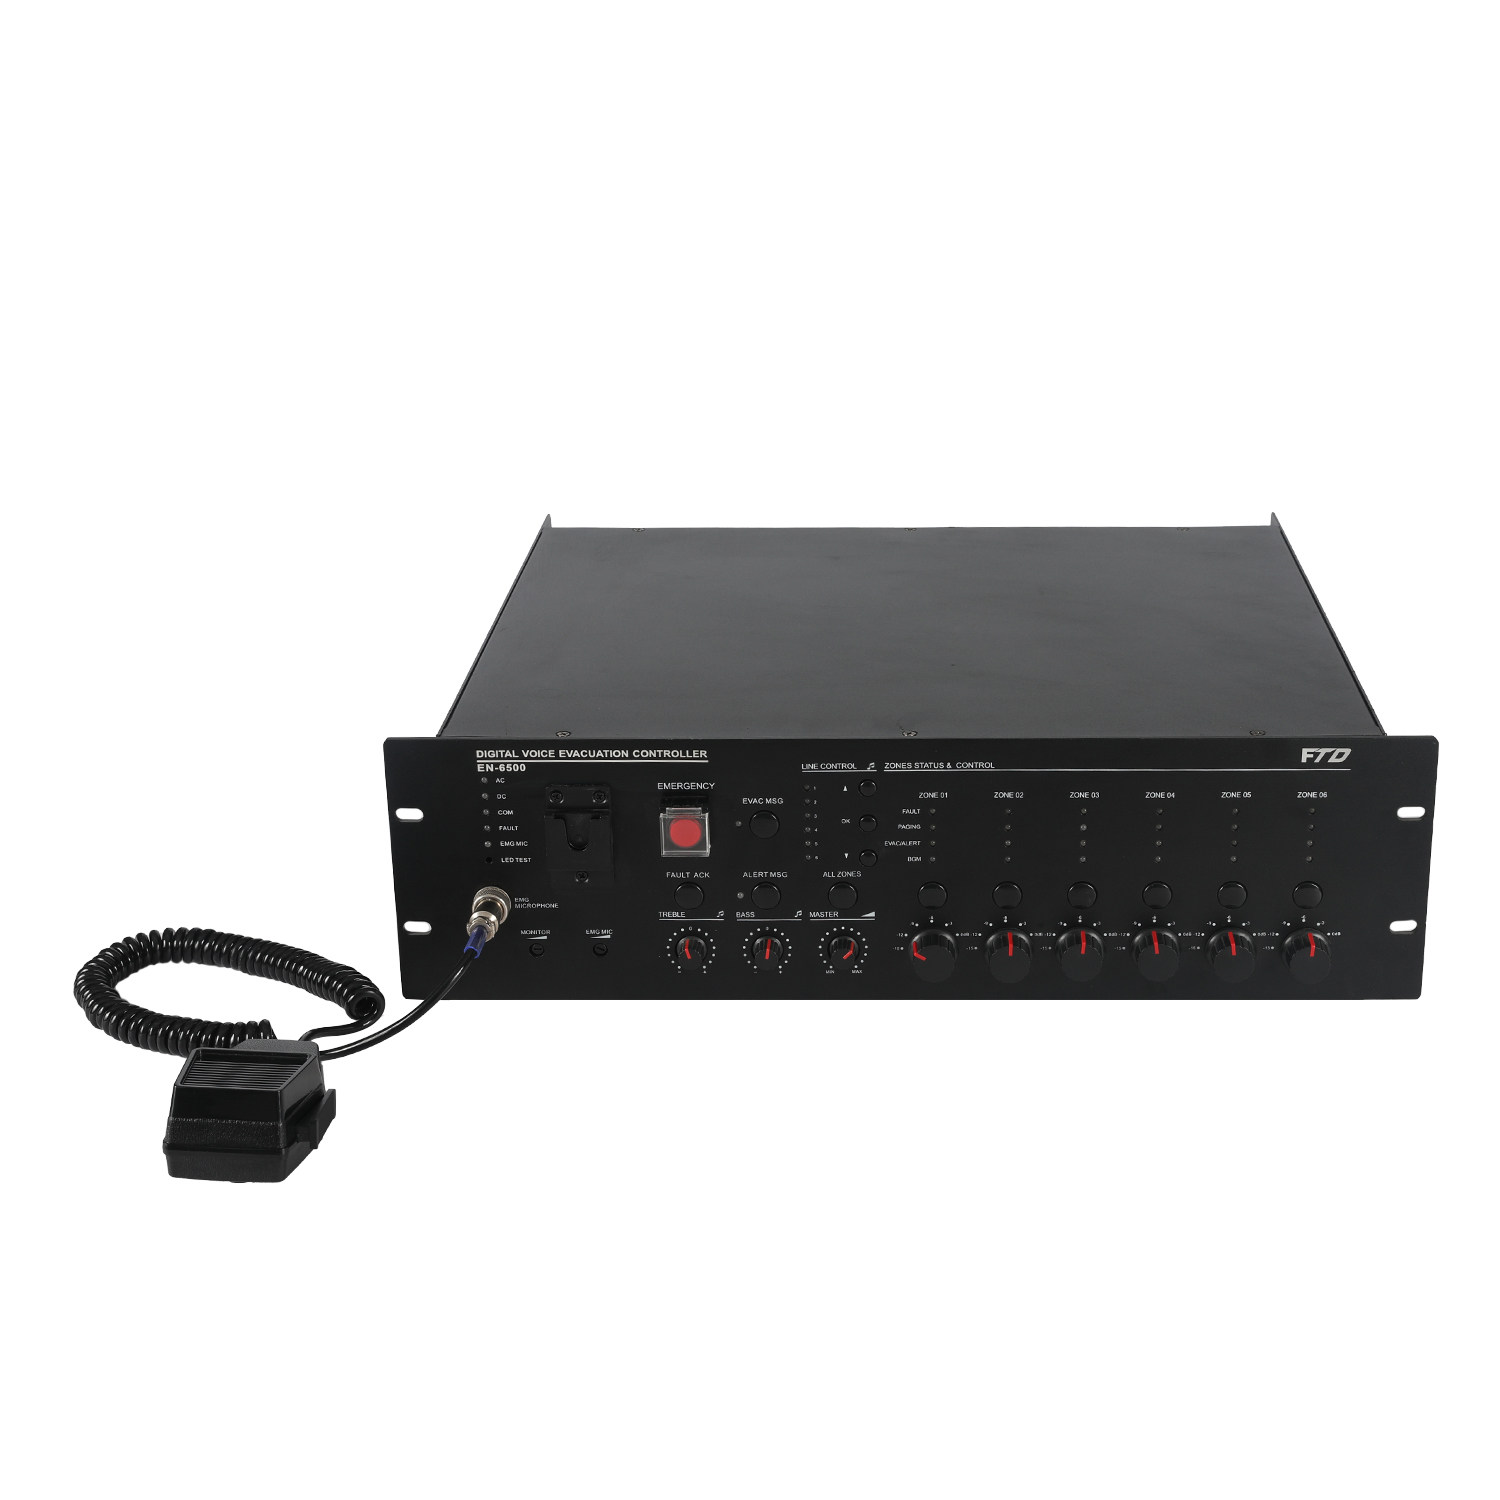 EN-6500 Voice Alarm system controler